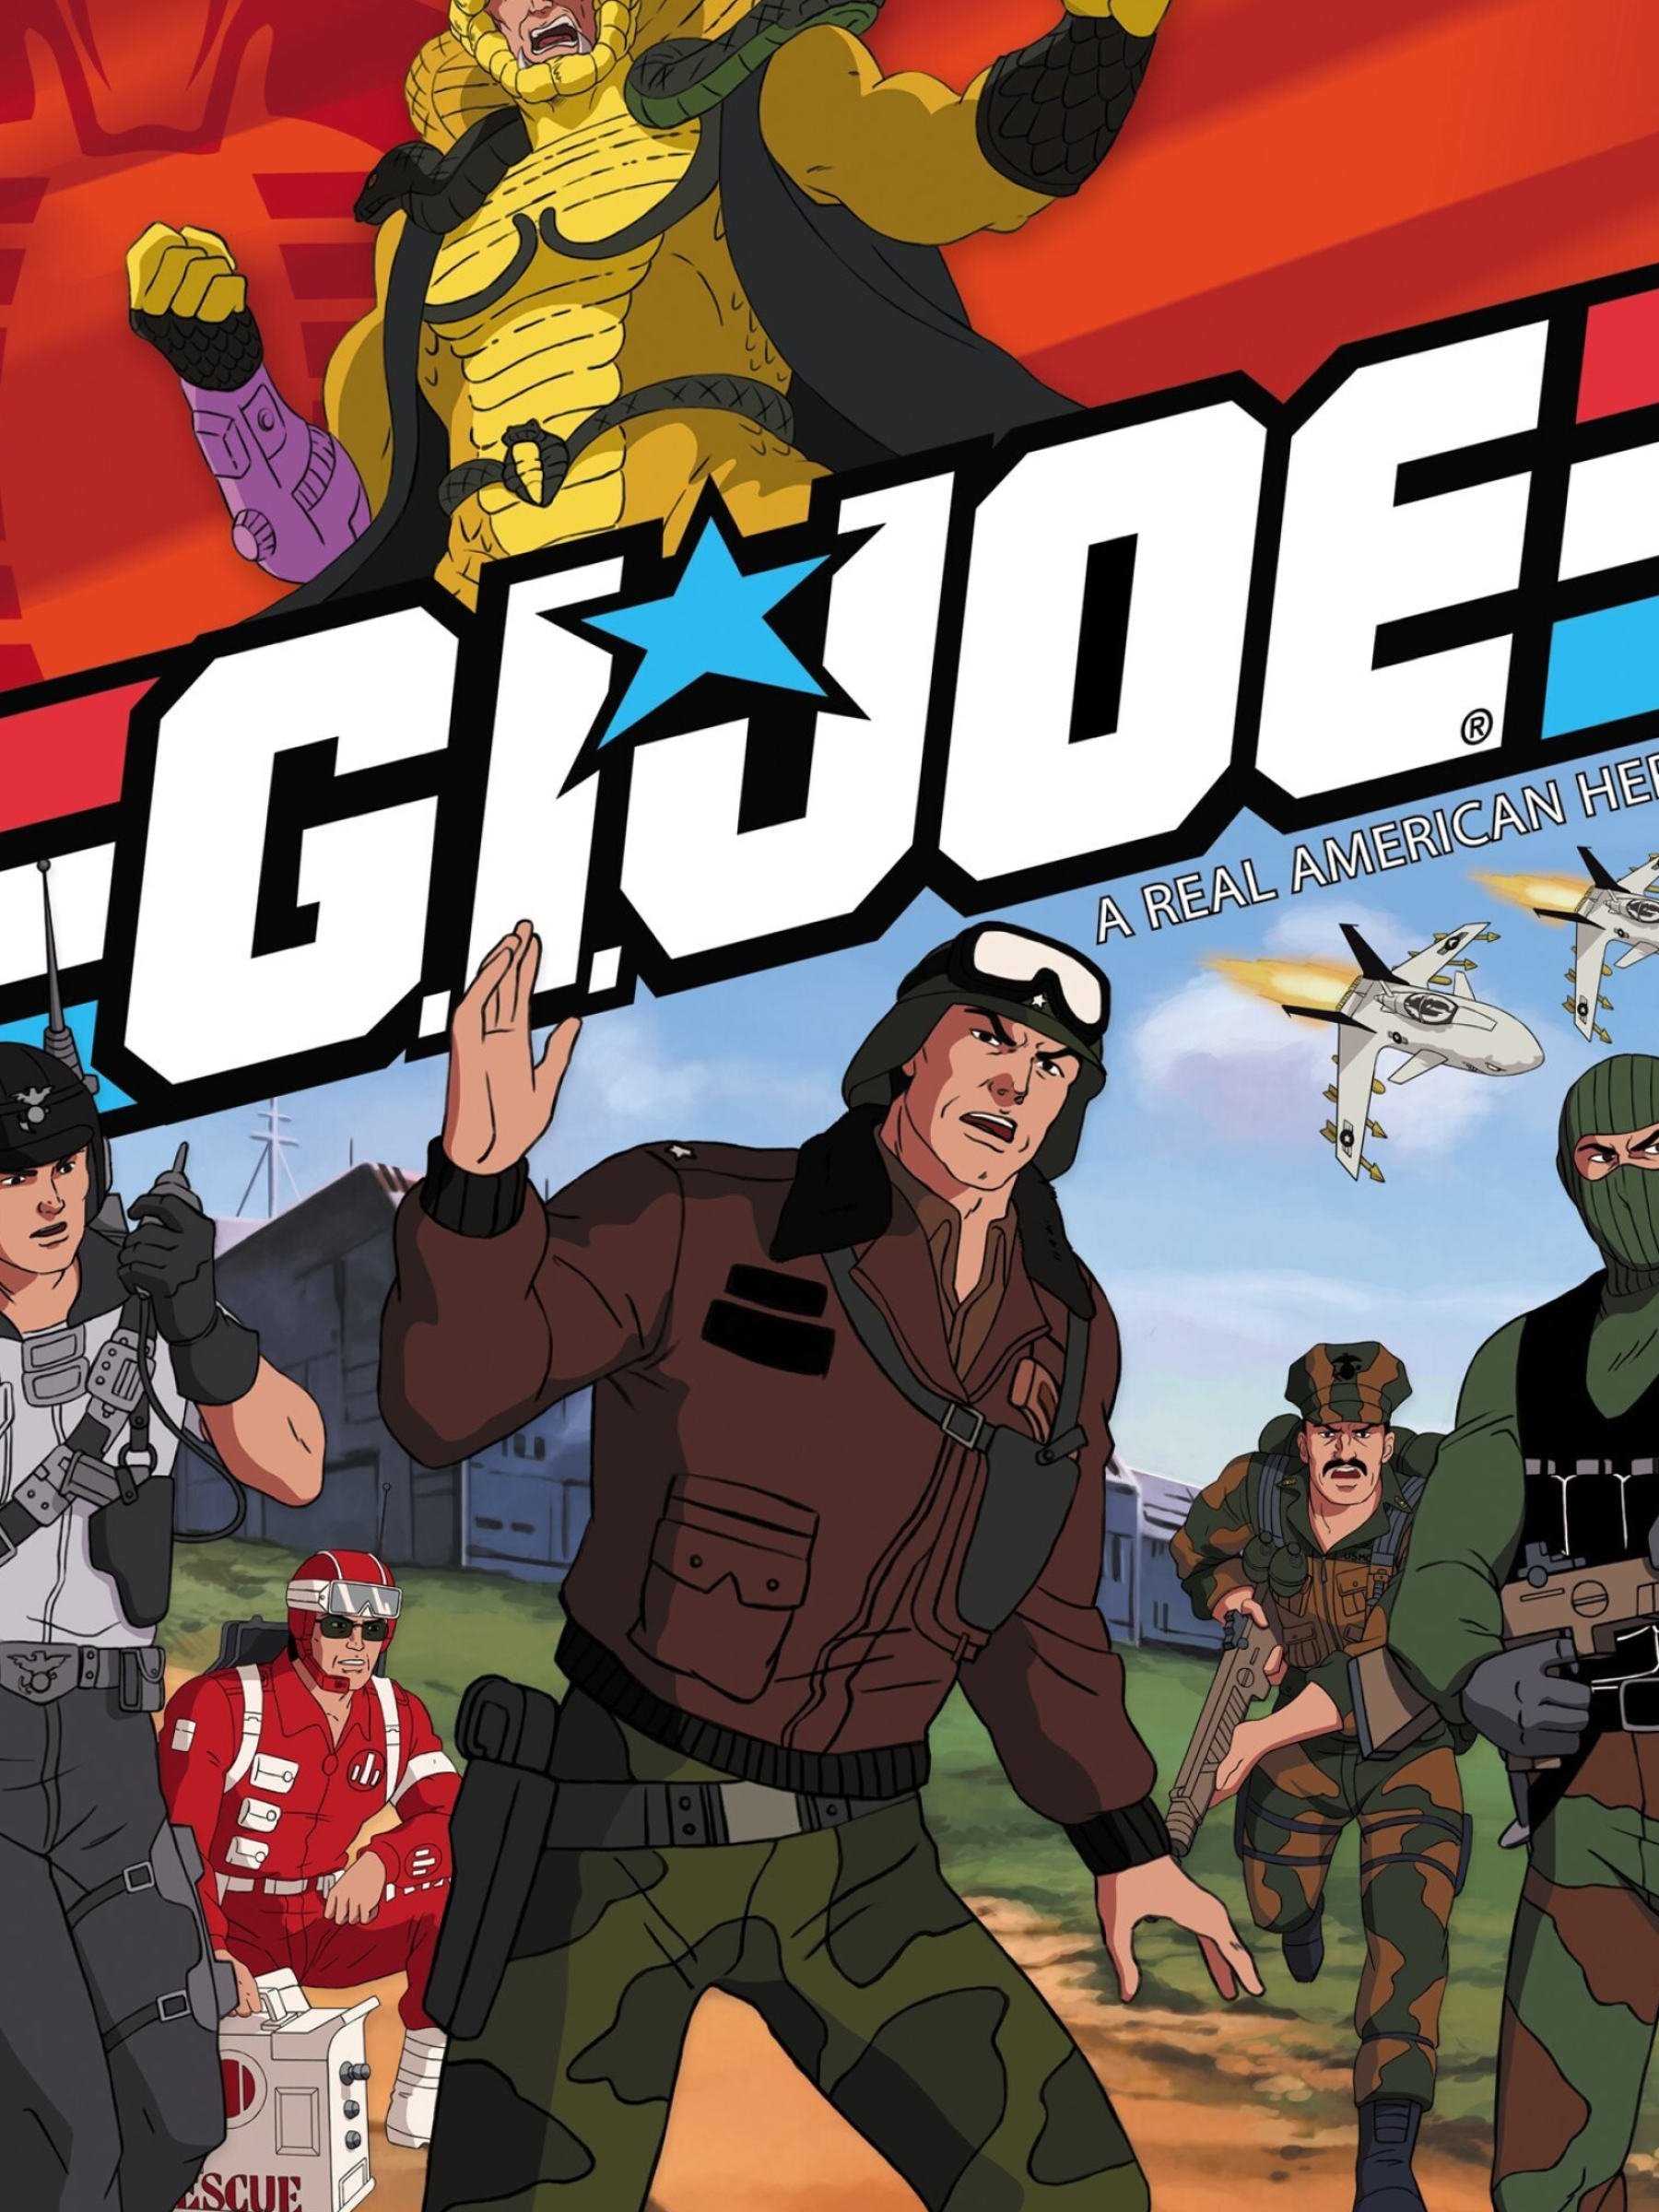 G.I. Joe (Cartoon): A Real American Hero: Season 2, A Popular Animated Series From The Mid-1980s. 1800x2400 HD Background.